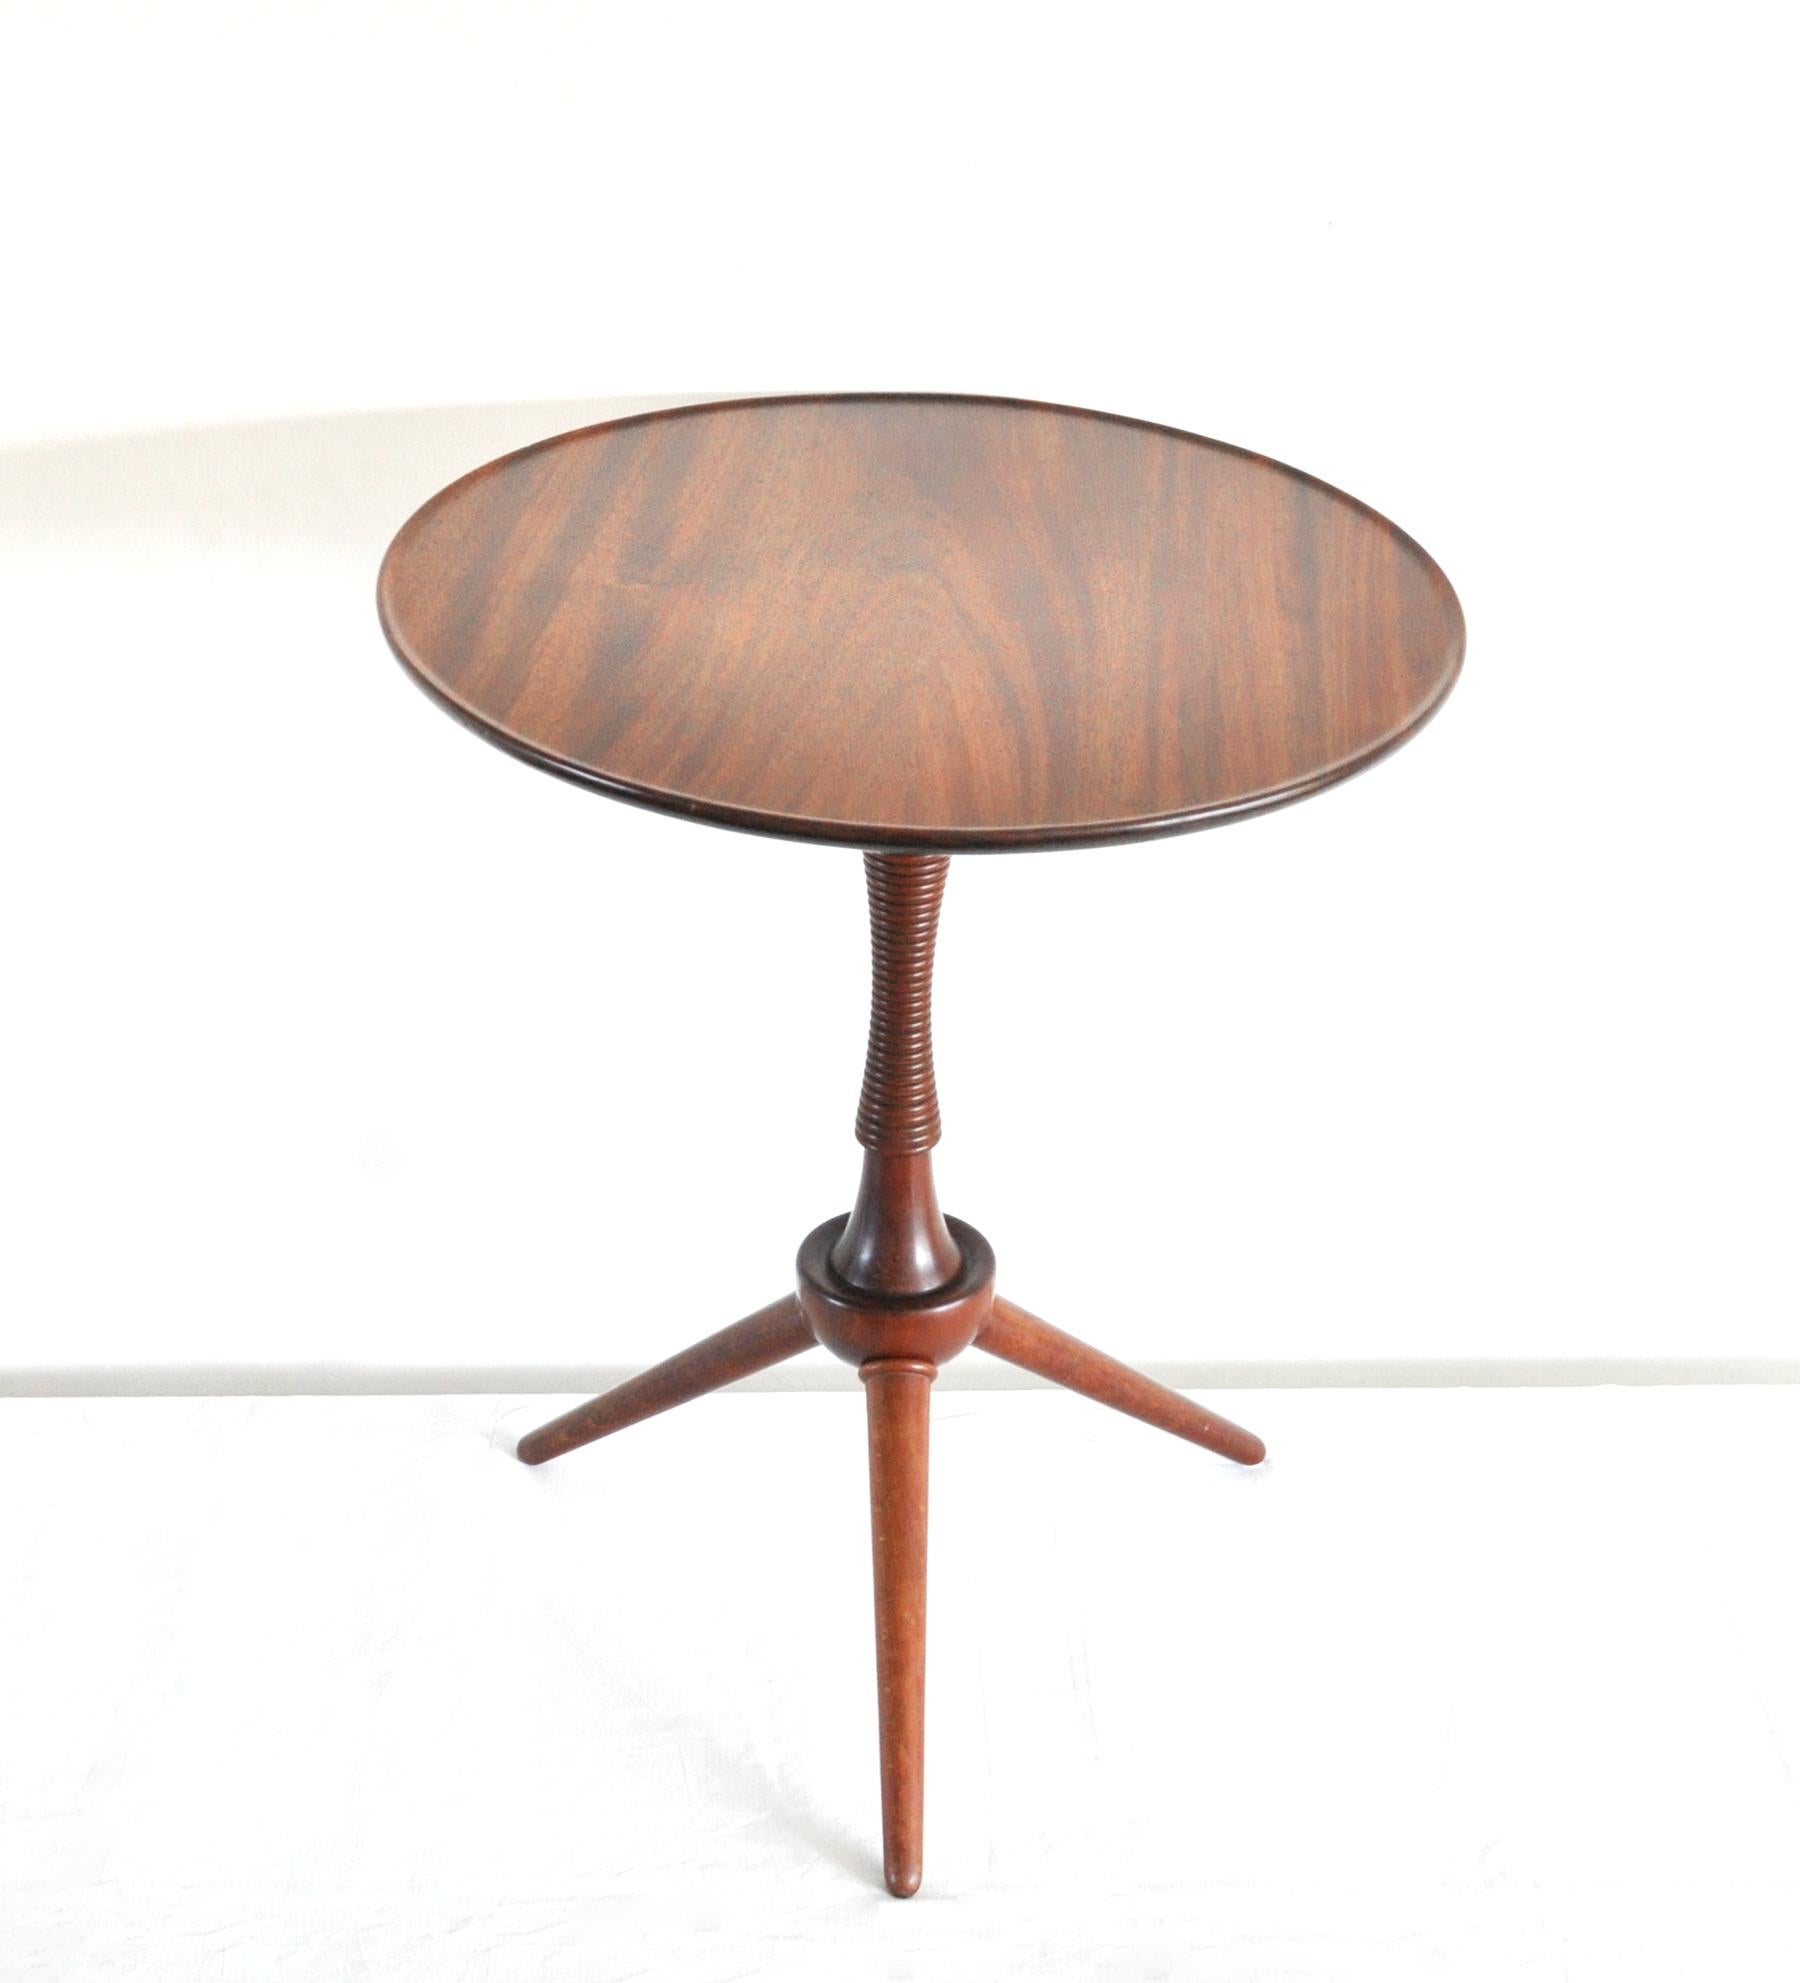 Scandinavian Modern Danish Side Table in Solid Mahogany by Cabinetmaker Frits Henningsen